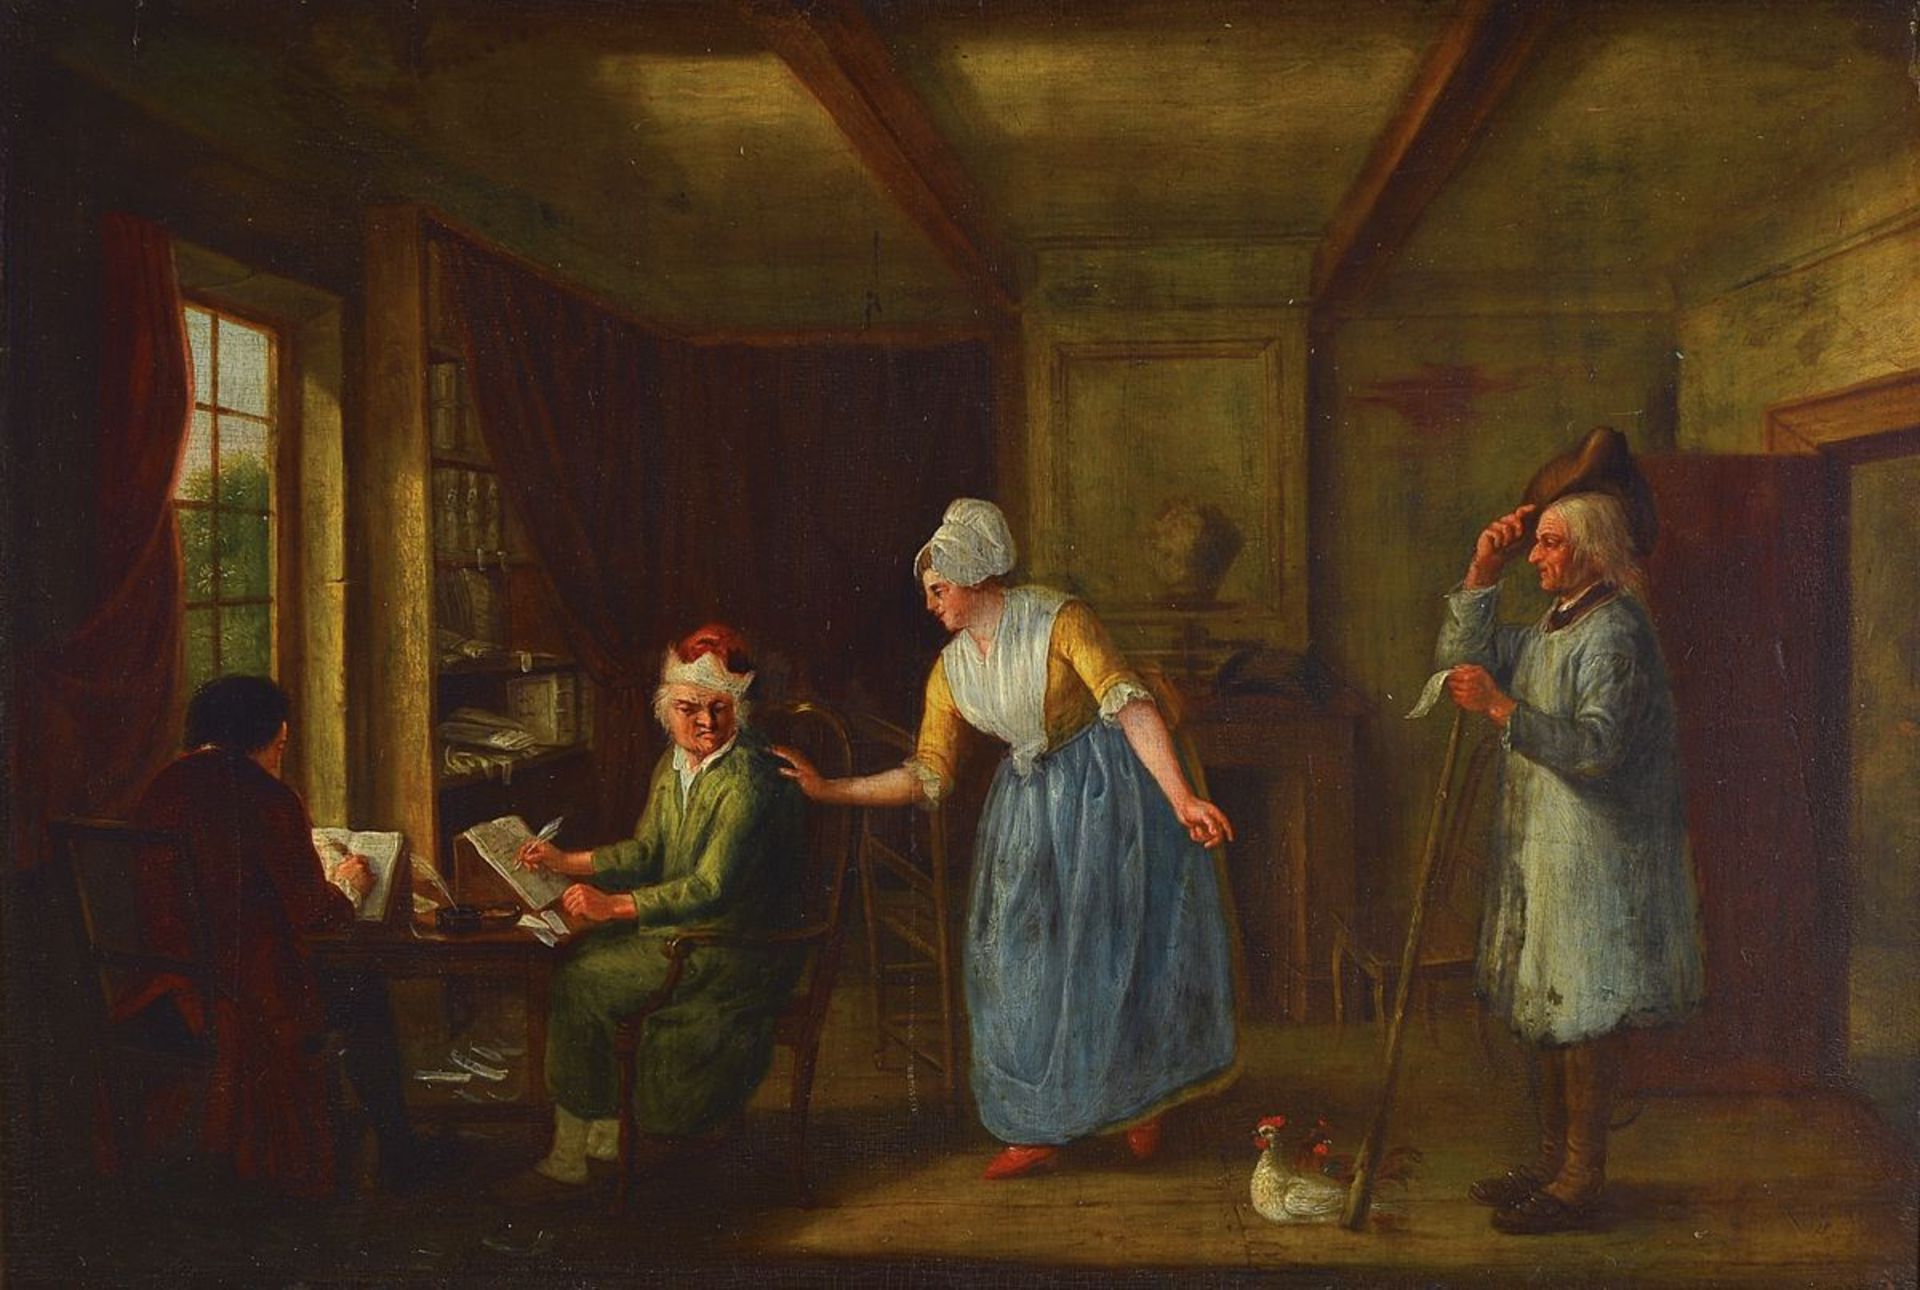 Biedermeier painting, german, around 1830/40, interior, multi-figure representation, landlord with